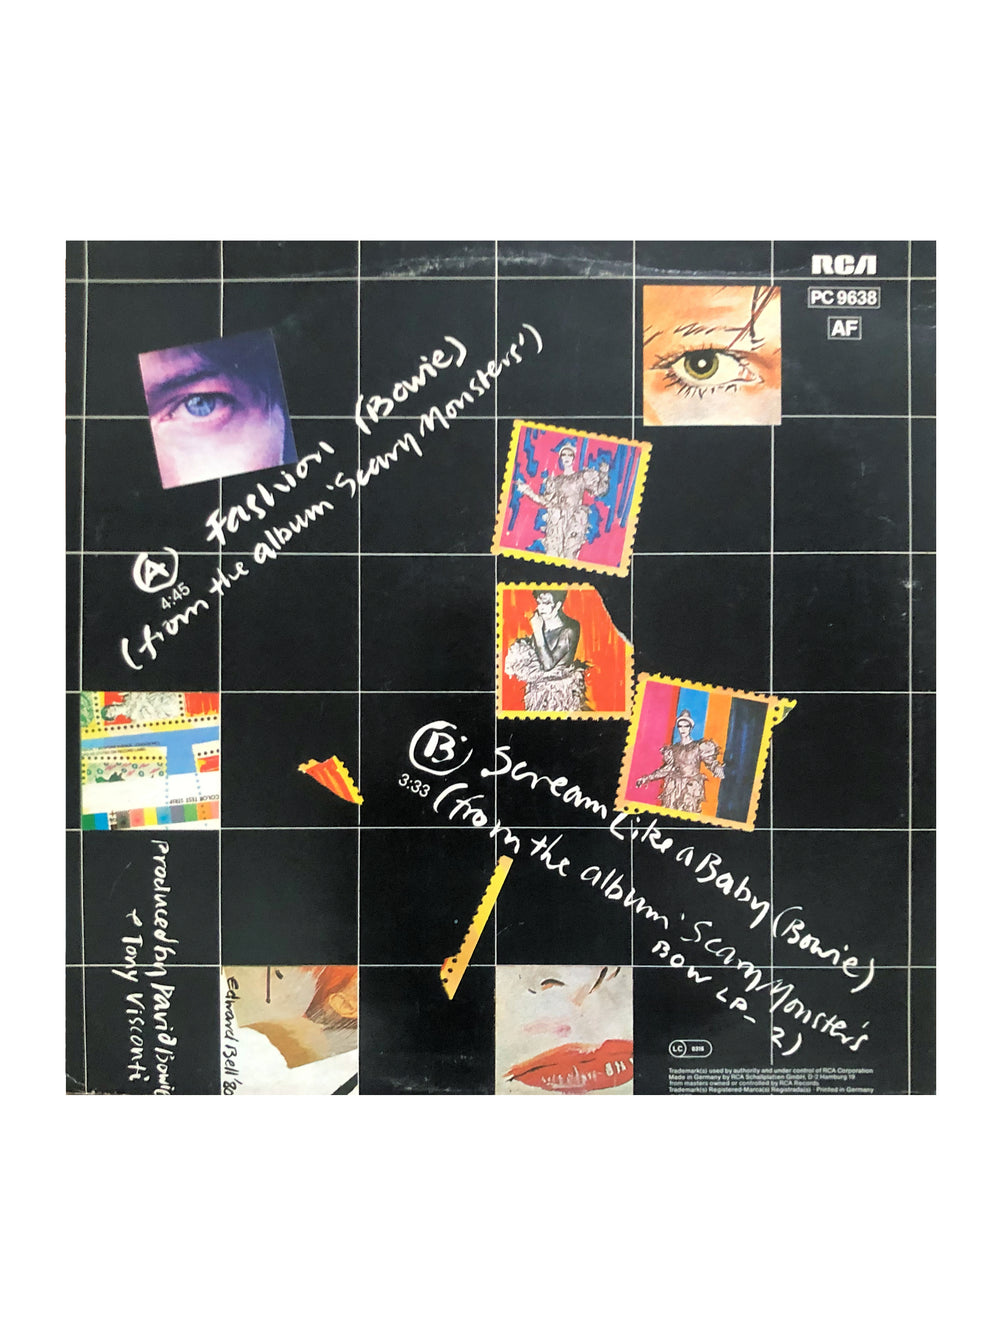 David Bowie - Fashion Vinyl 12 Inch Germany Preloved:1980